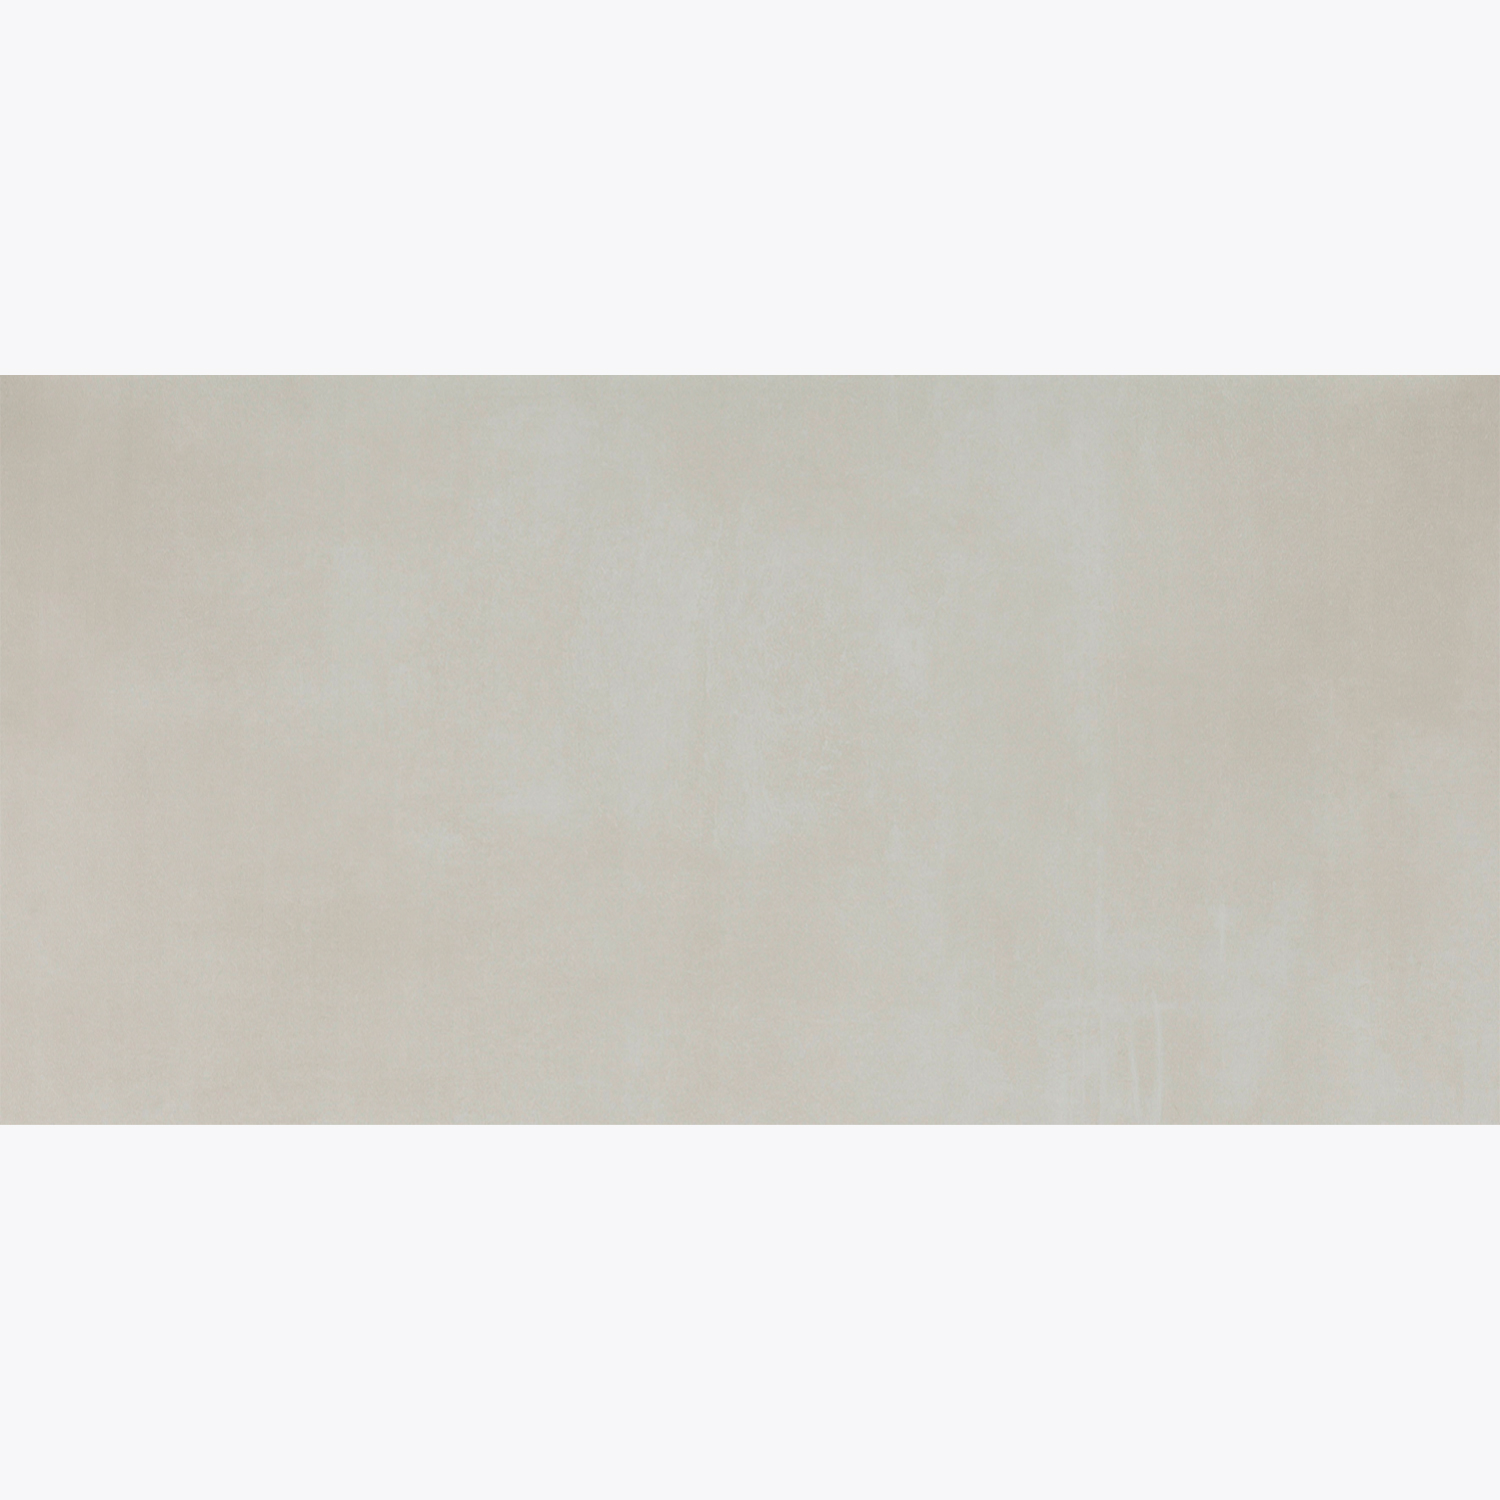 Pavimento New York gres porcellanato 30x60cm beige opaco